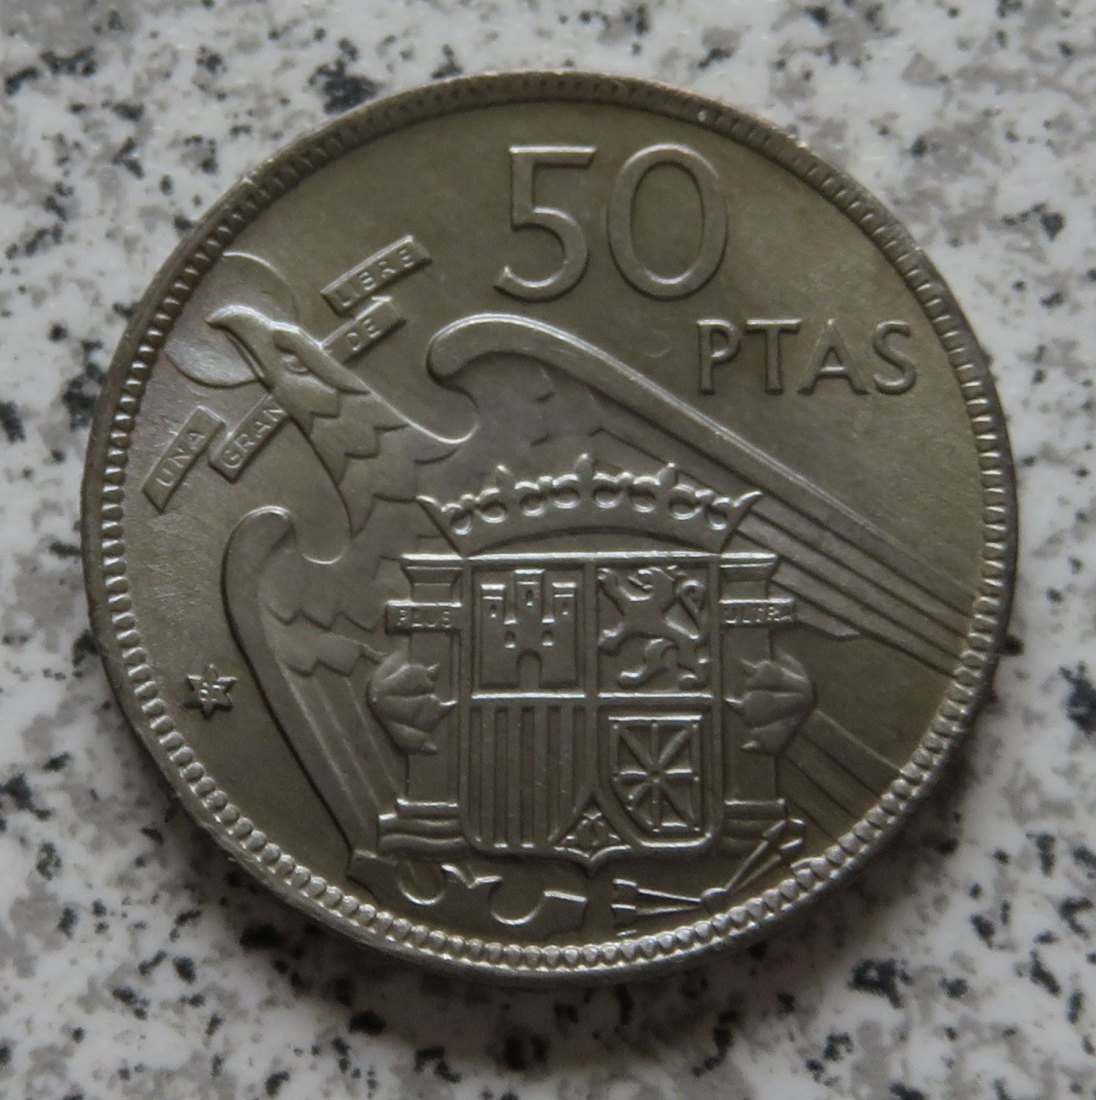  Spanien 50 Pesetas 1957, im Sternchen 67 (50 Pesetas 1967) (2)   